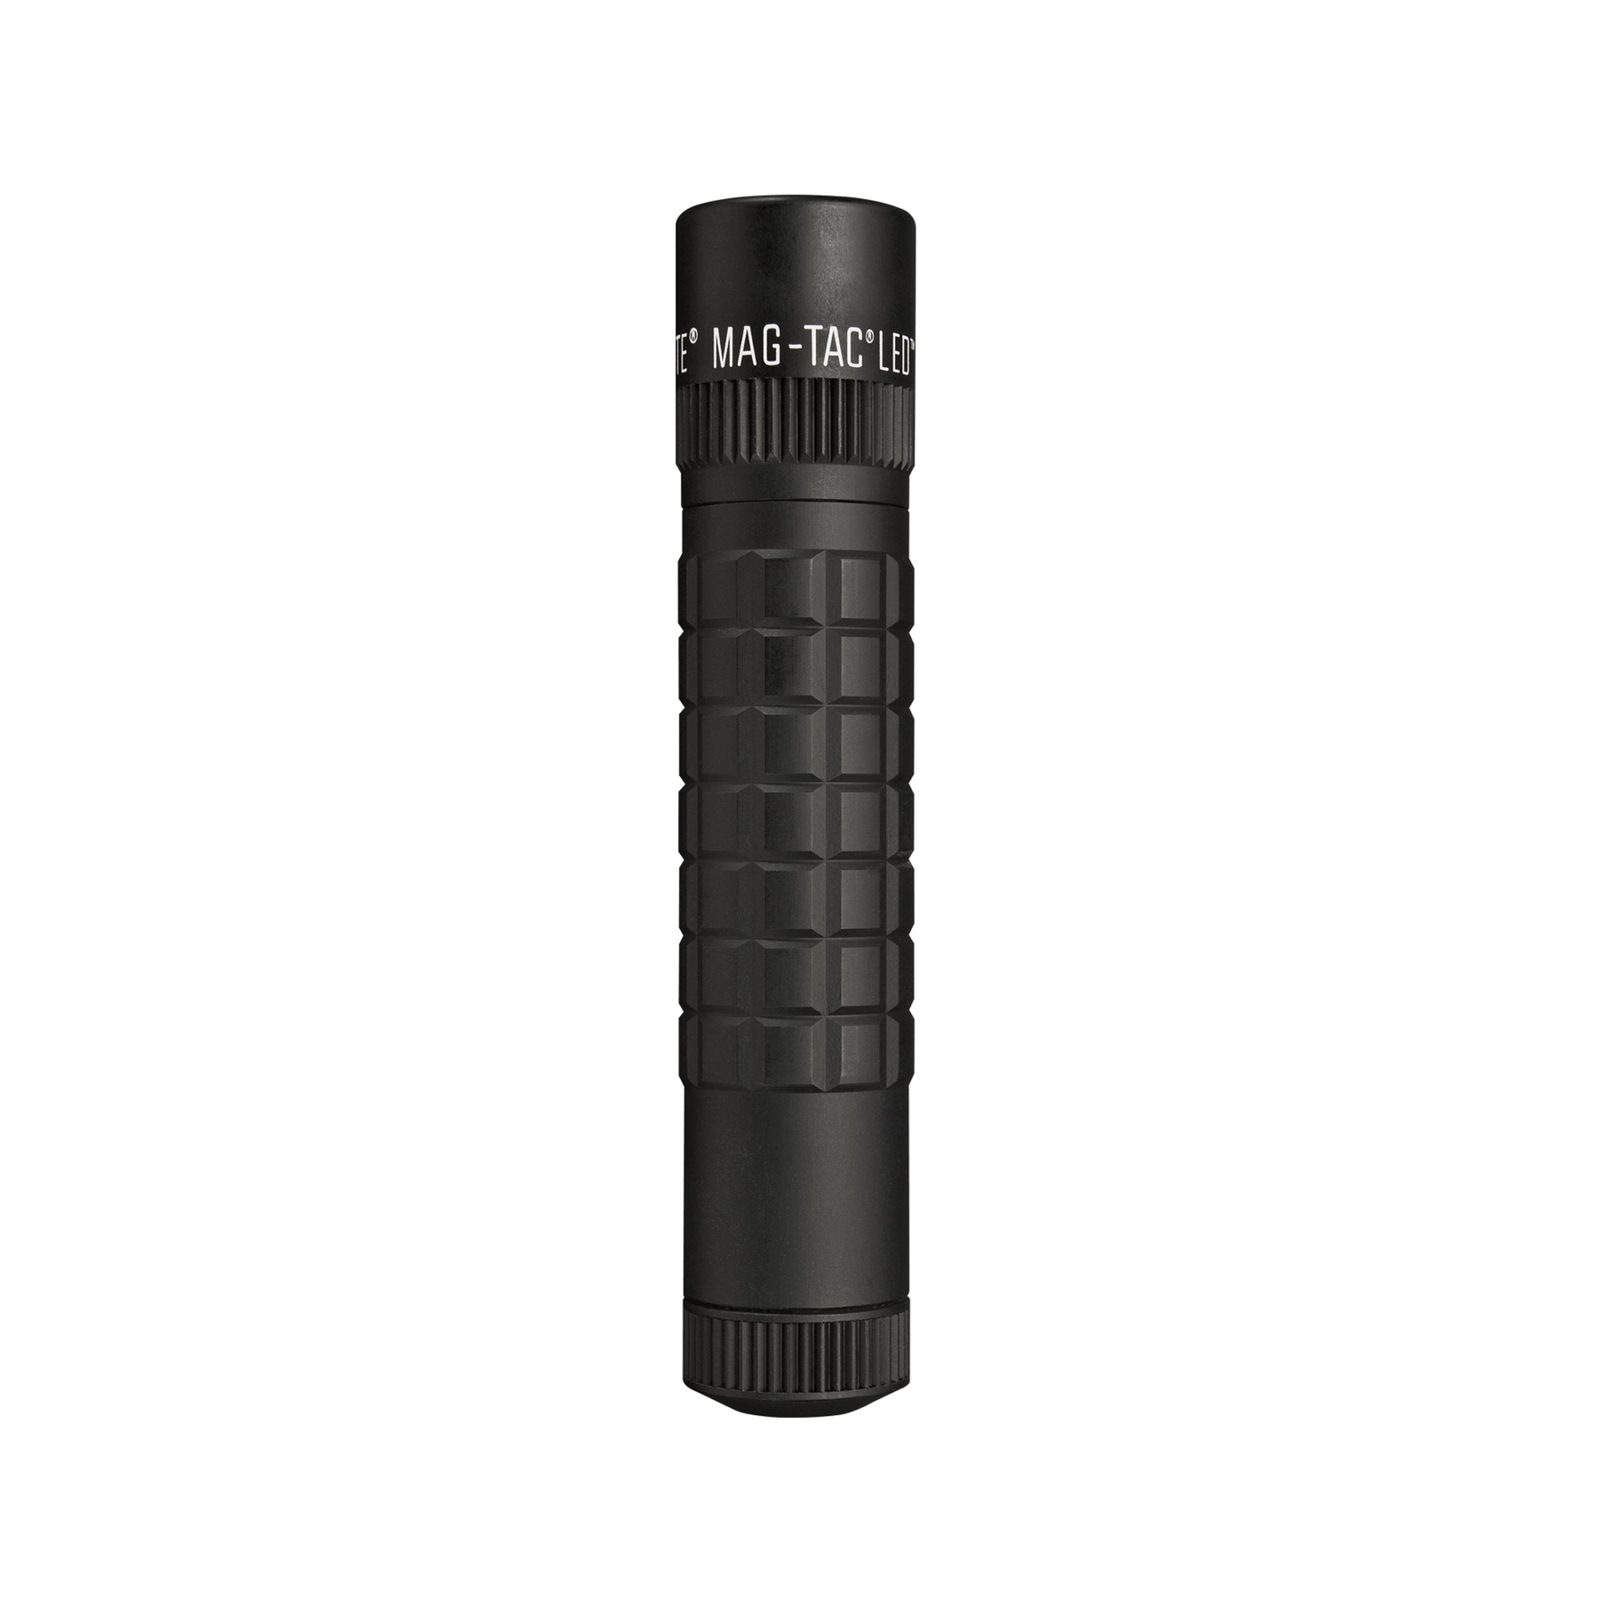 Maglite LED torch Mag-Tac, 2-Cell CR123, black